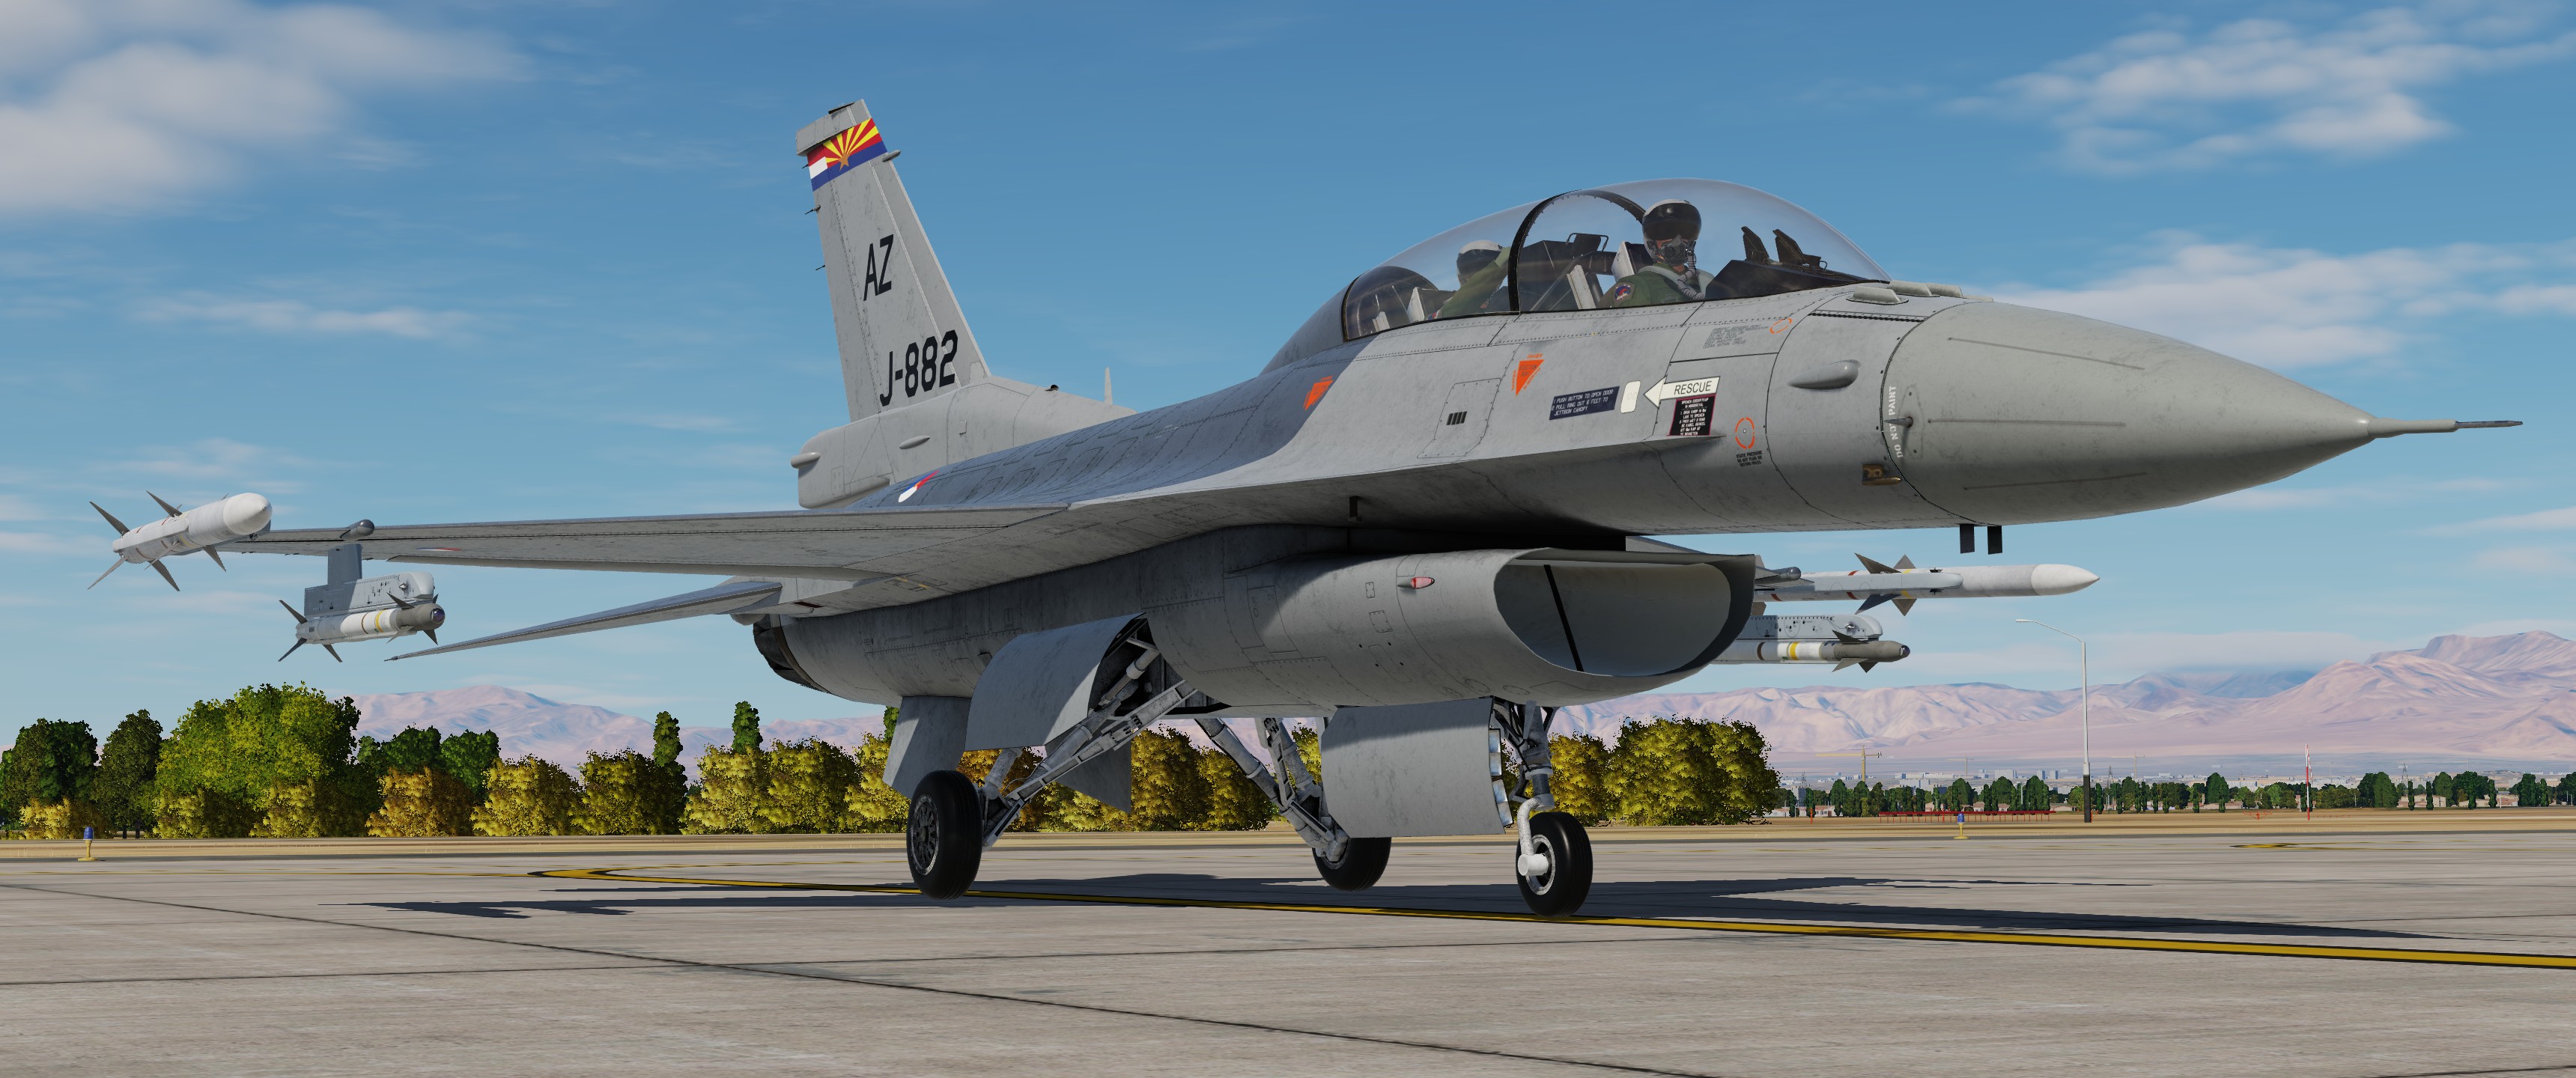 F-16D(BM) Sufa Mod J-882 RNLAF F-16 OCU 148th FS AZ, 162 FW, Arizona ANG, Morris AFB, Tucson.